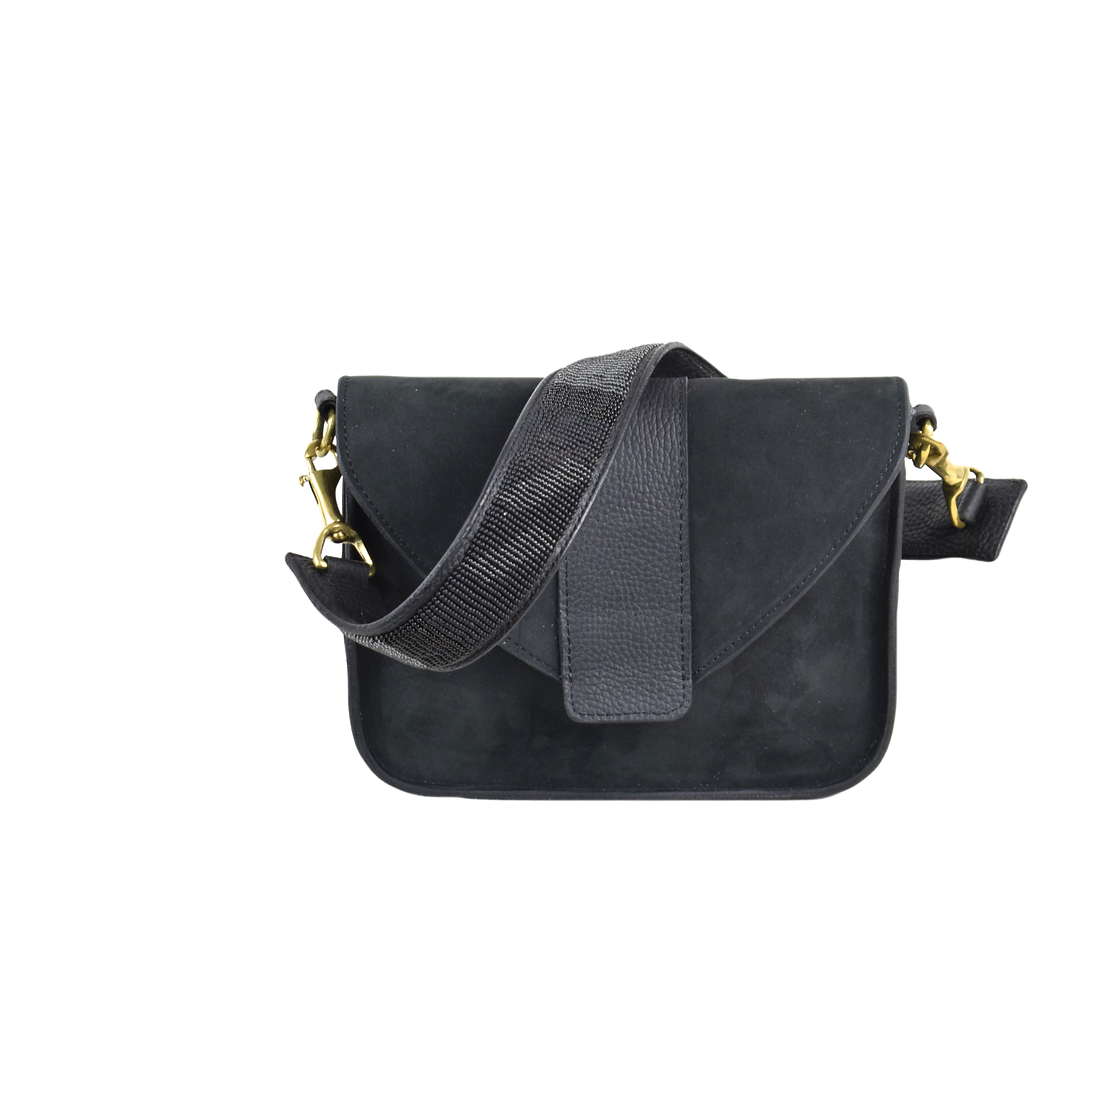 Black and White Pearl Crossbody Beaded Bag Transparent Satchel Handbag